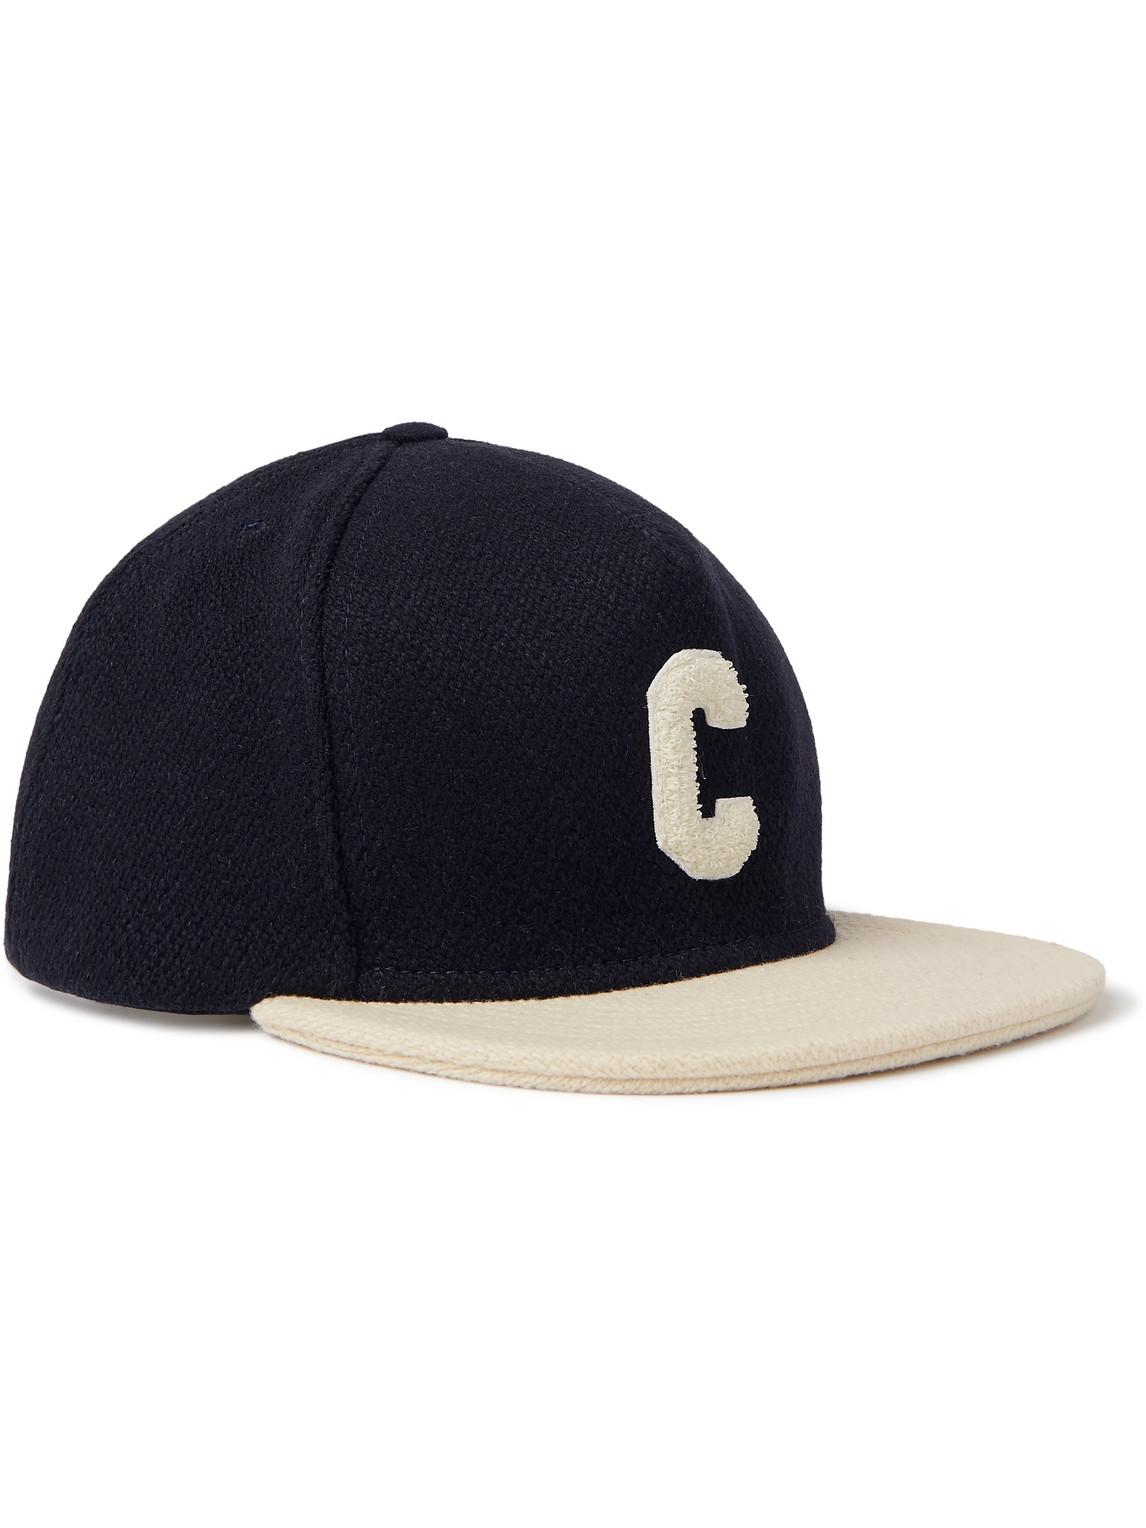 CELINE HOMME Logo-appliquéd Wool-blend Baseball Cap in Black for Men | Lyst